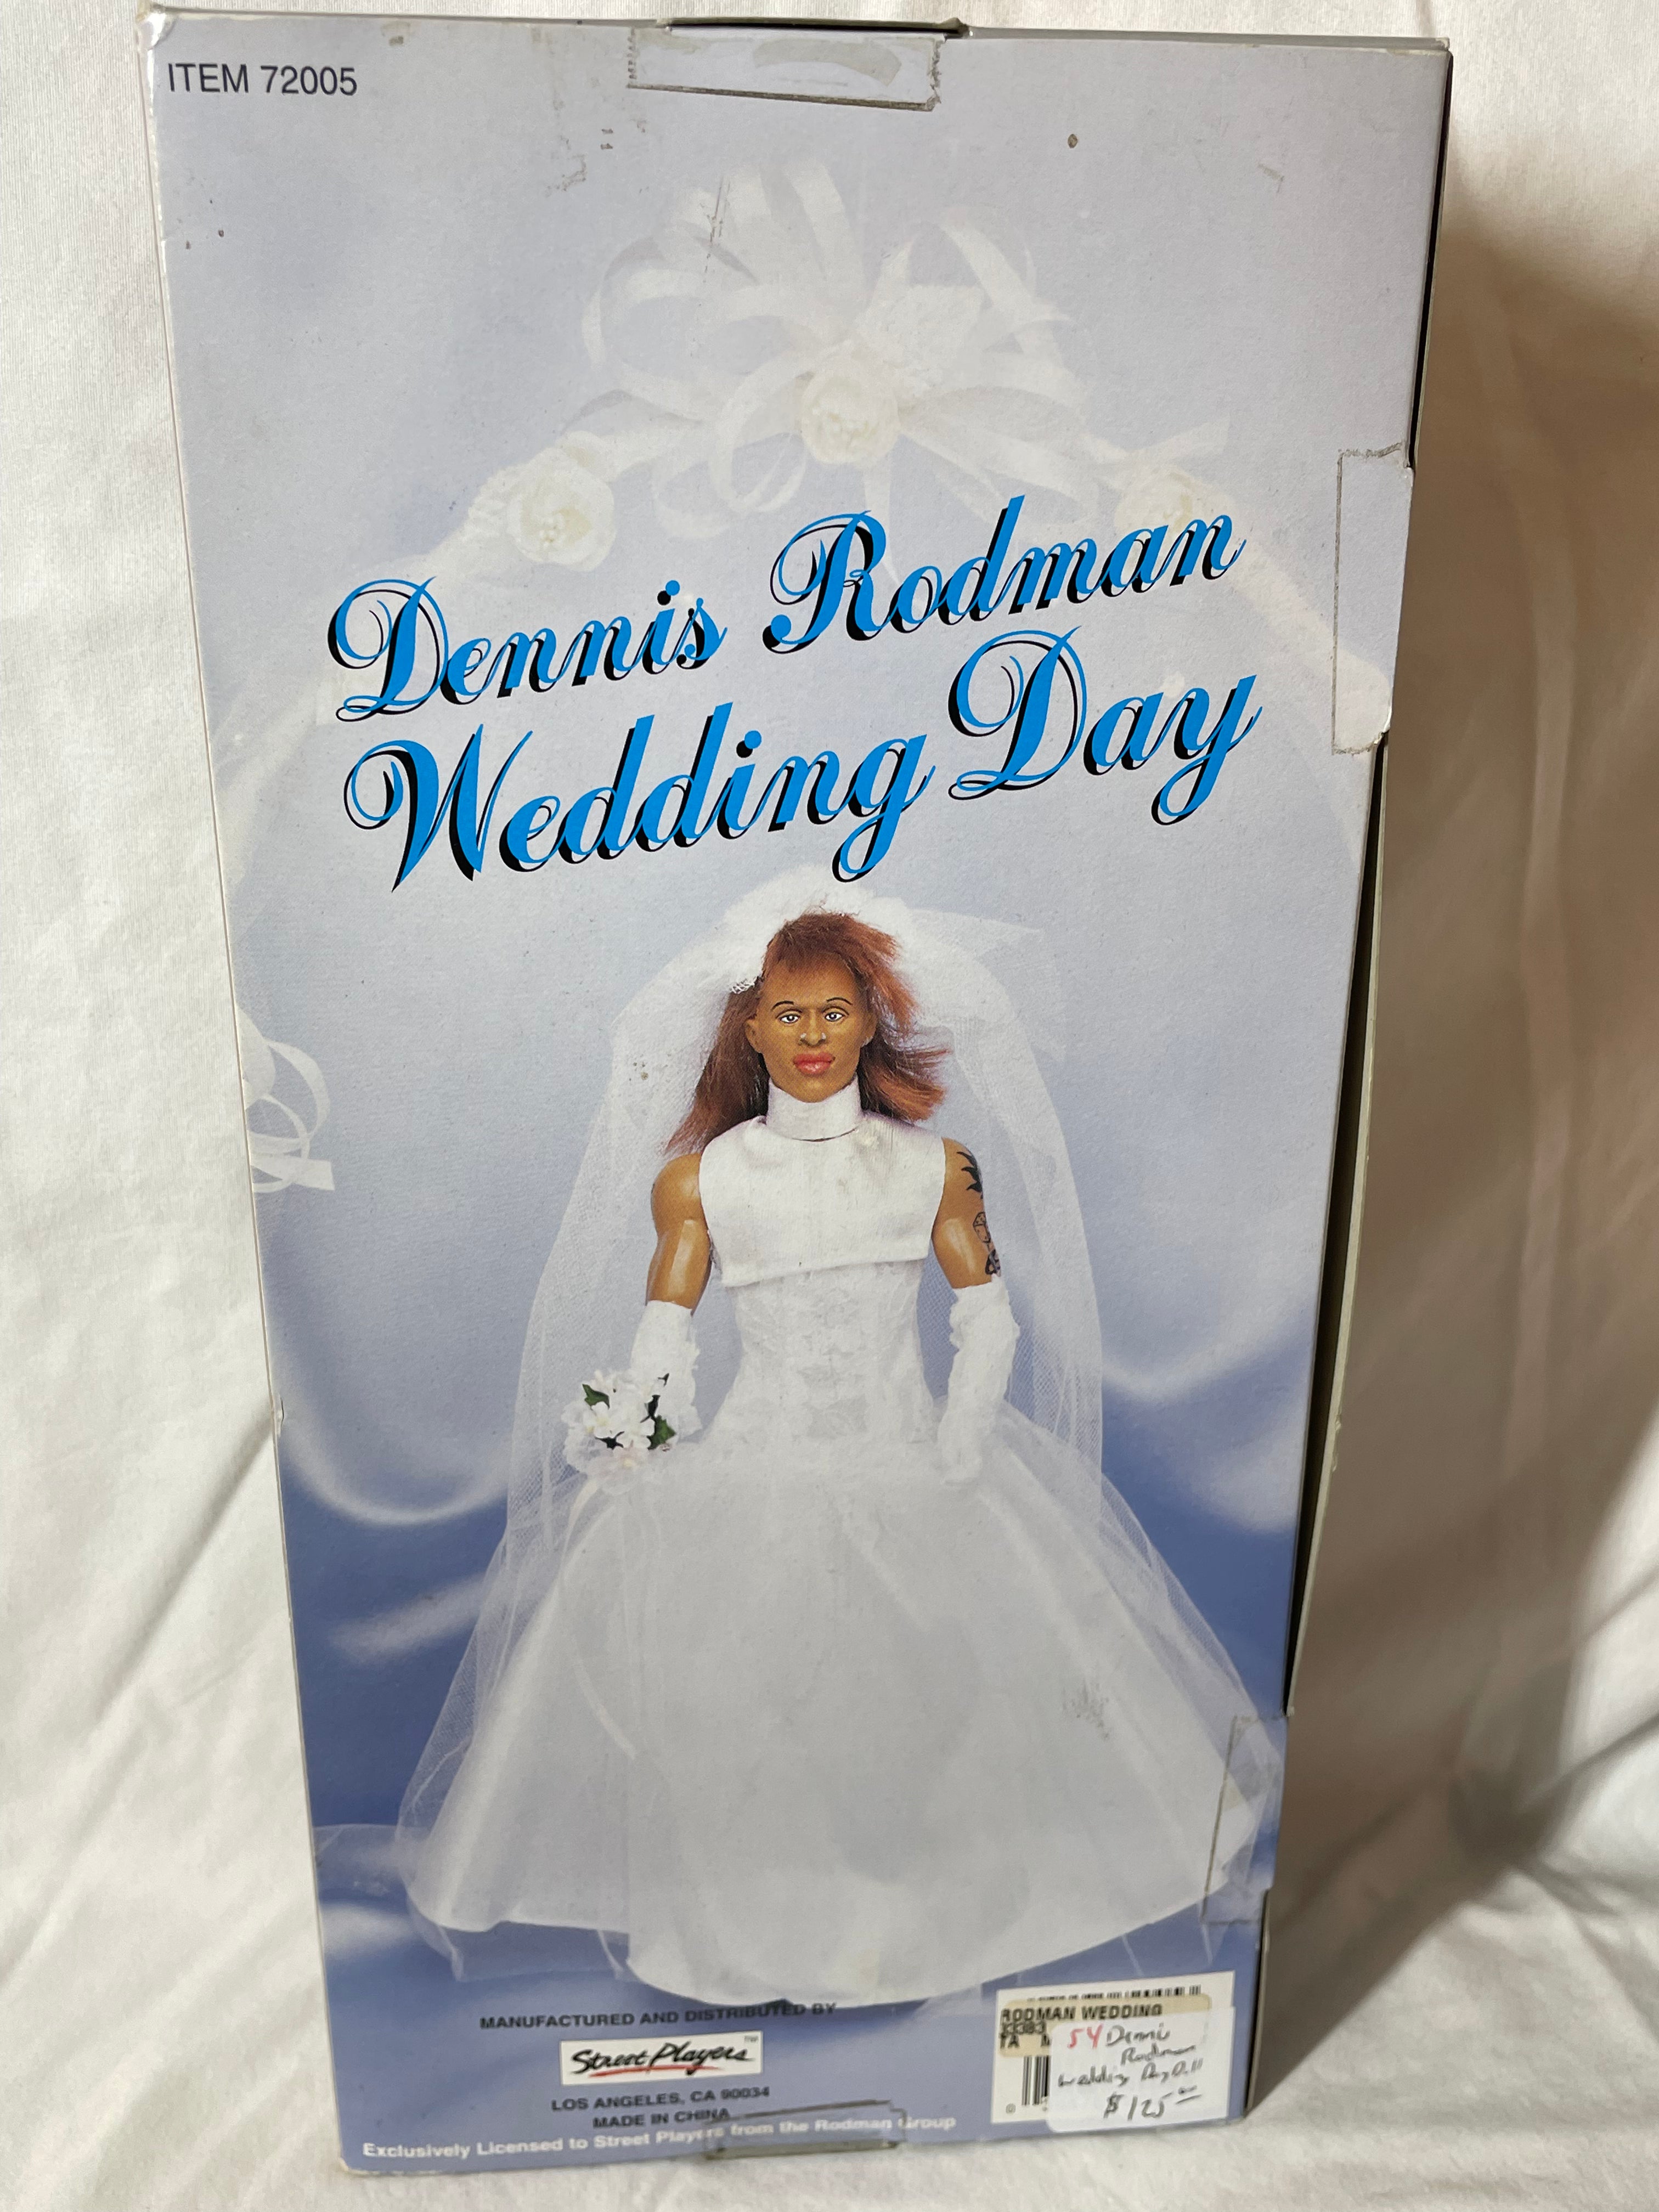 dennis rodman in a wedding dress